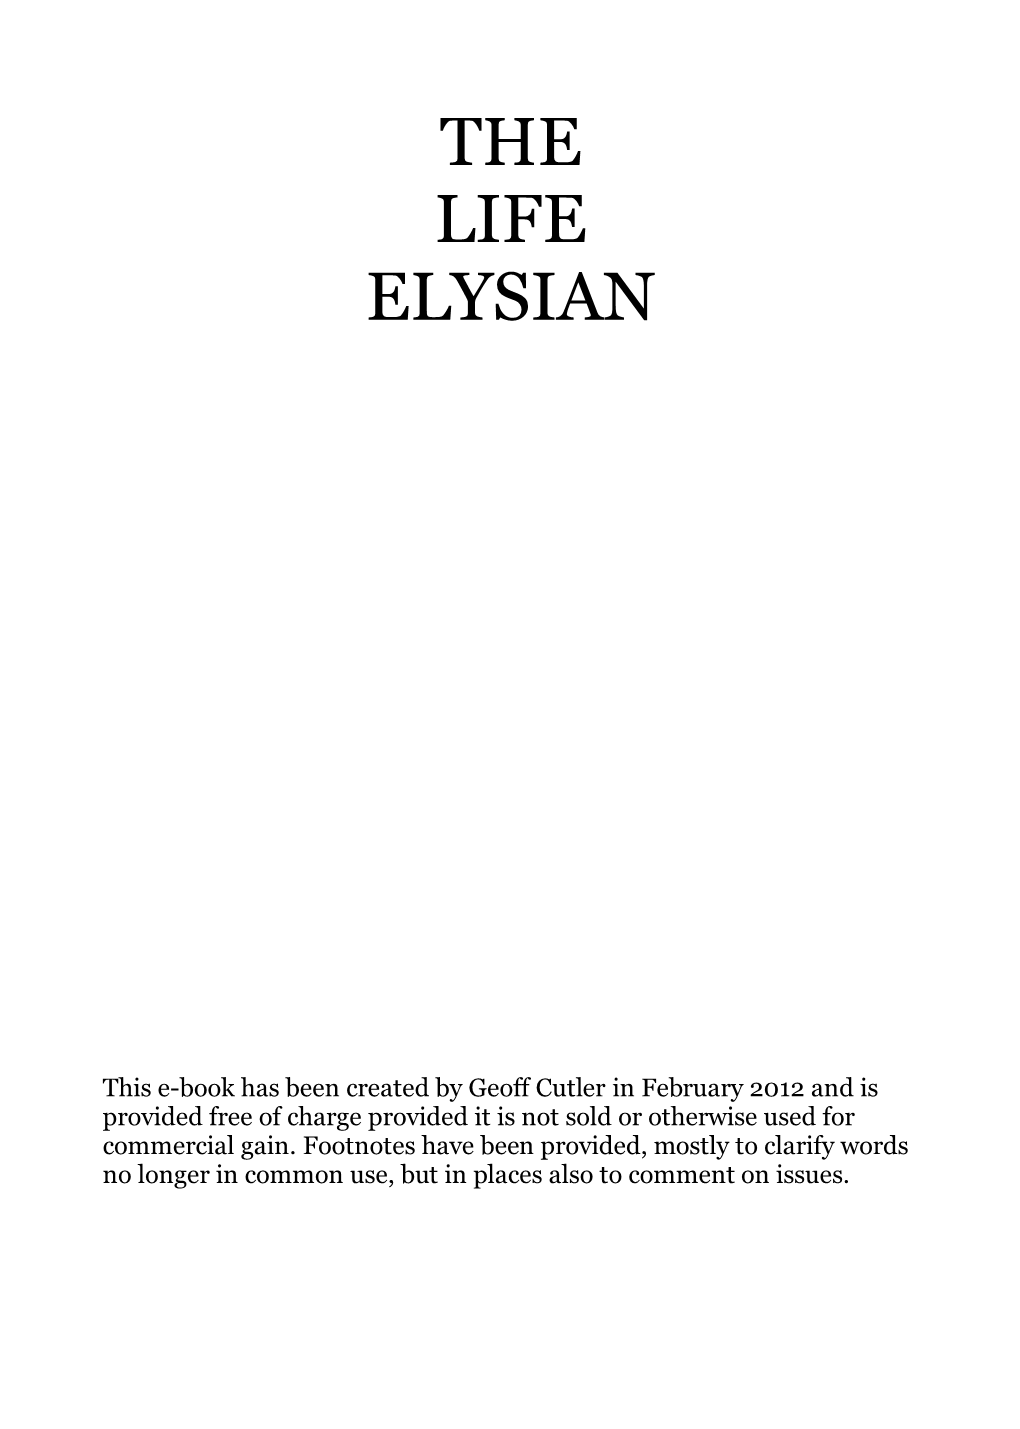 The Life Elysian